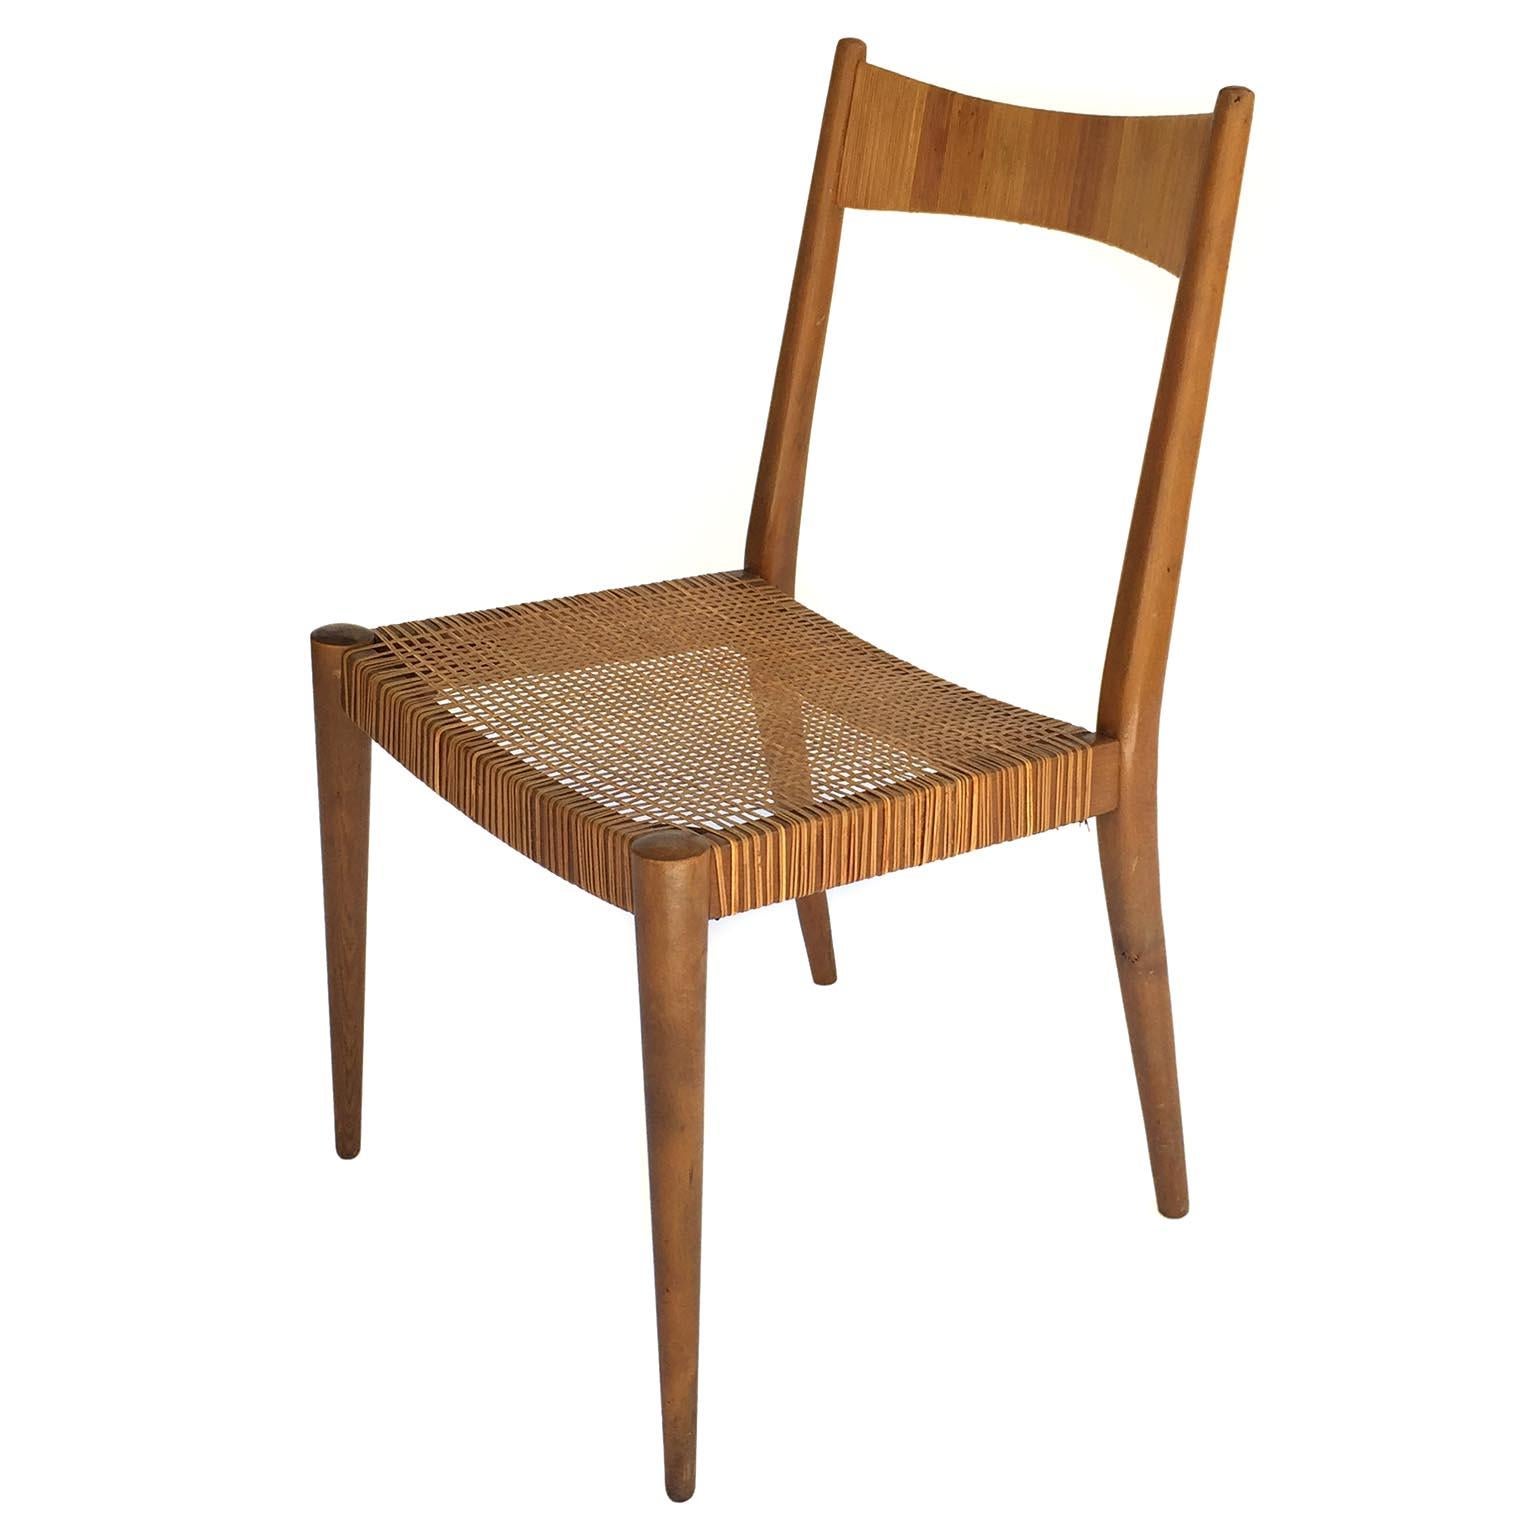 Six Anna-Lülja Praun Chairs, Wood Cane Wicker, 1950s 1